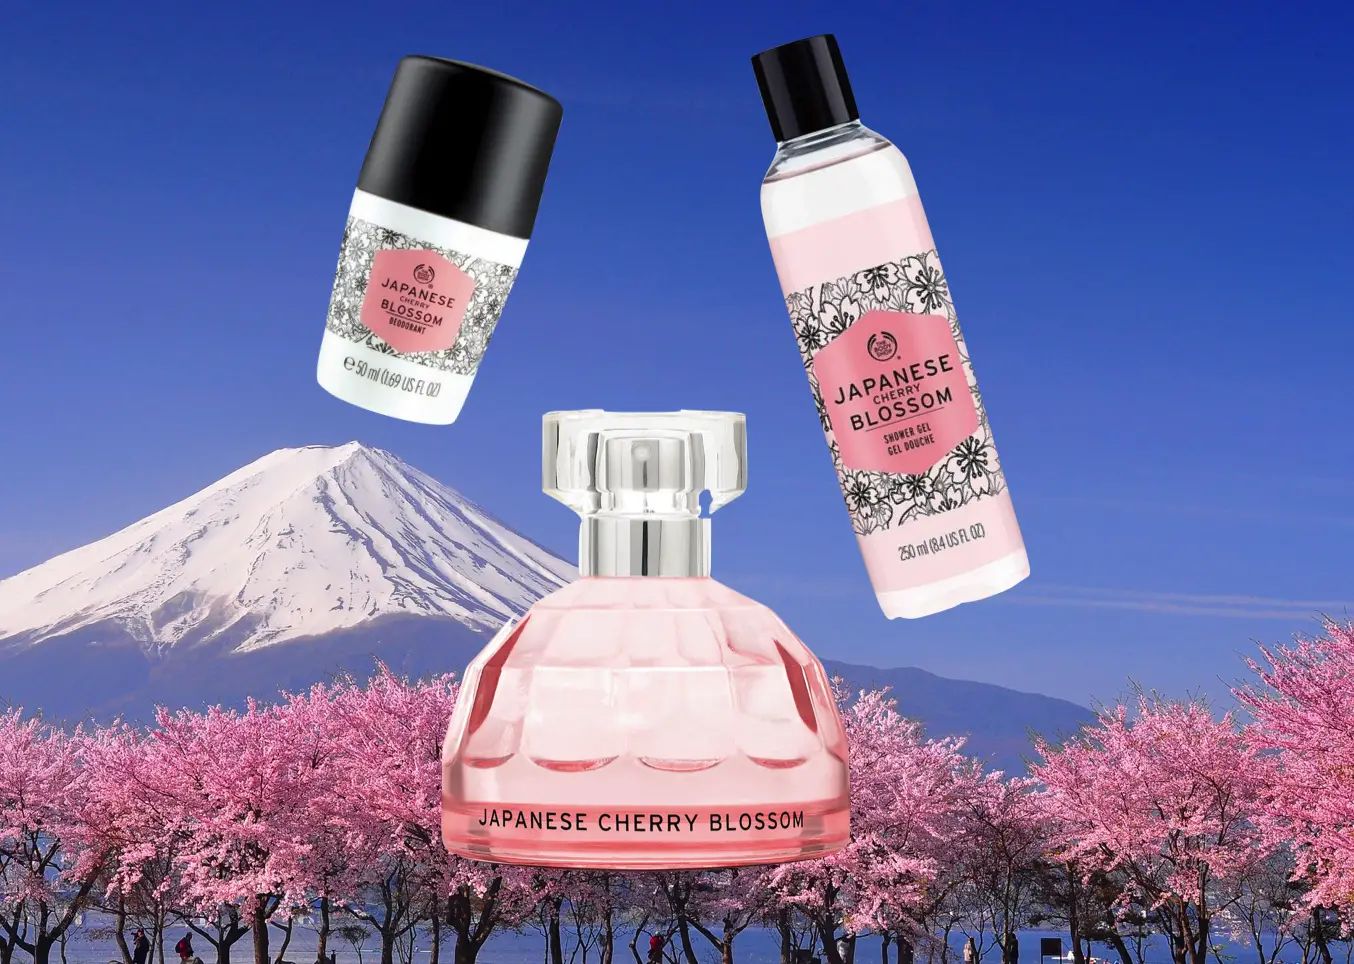 The Body Shop Japanese Cherry Blossom